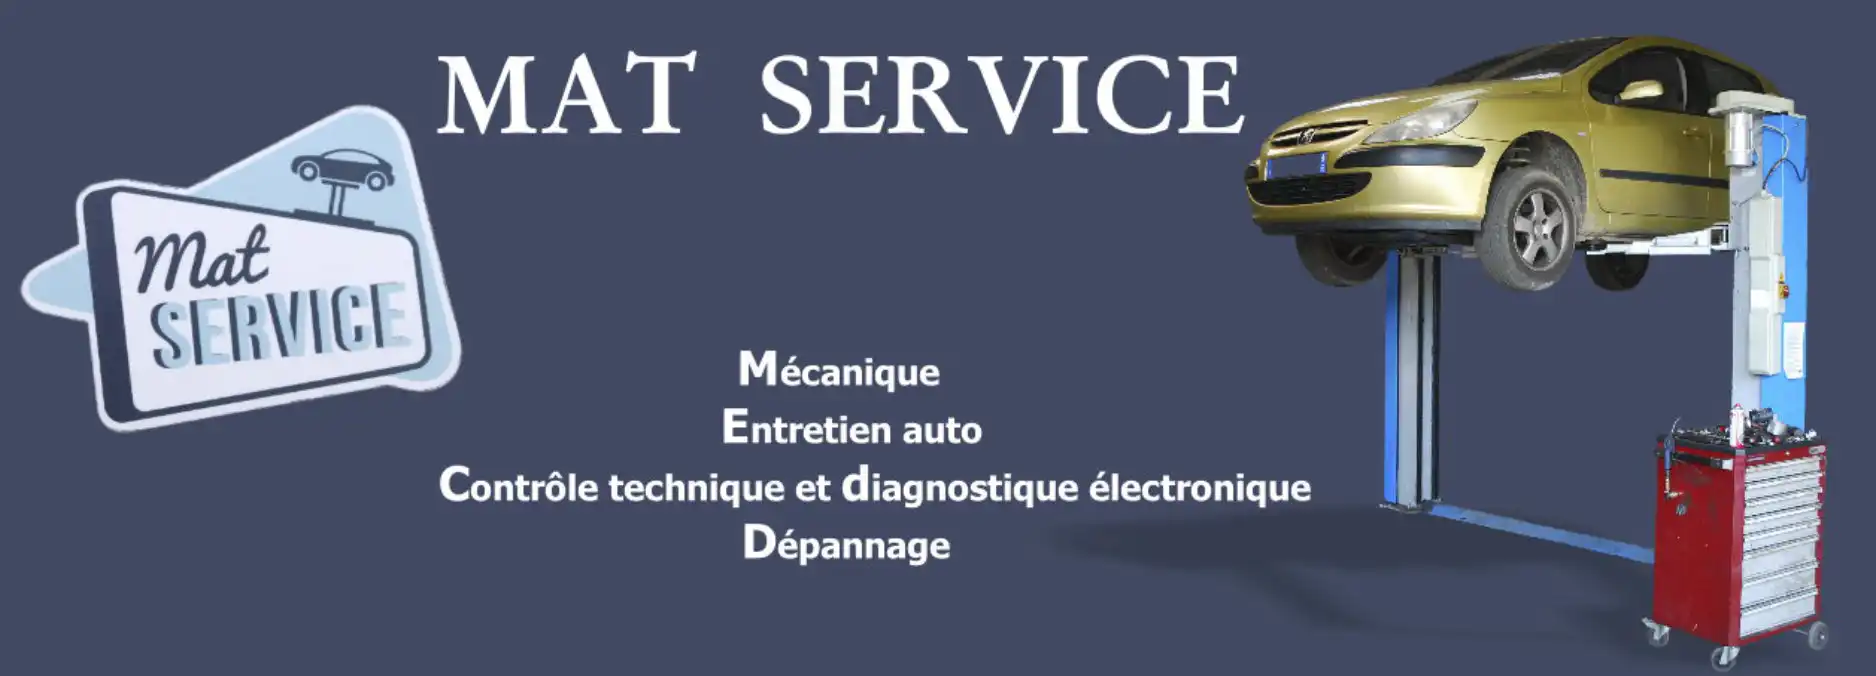 Enseigne Mat service